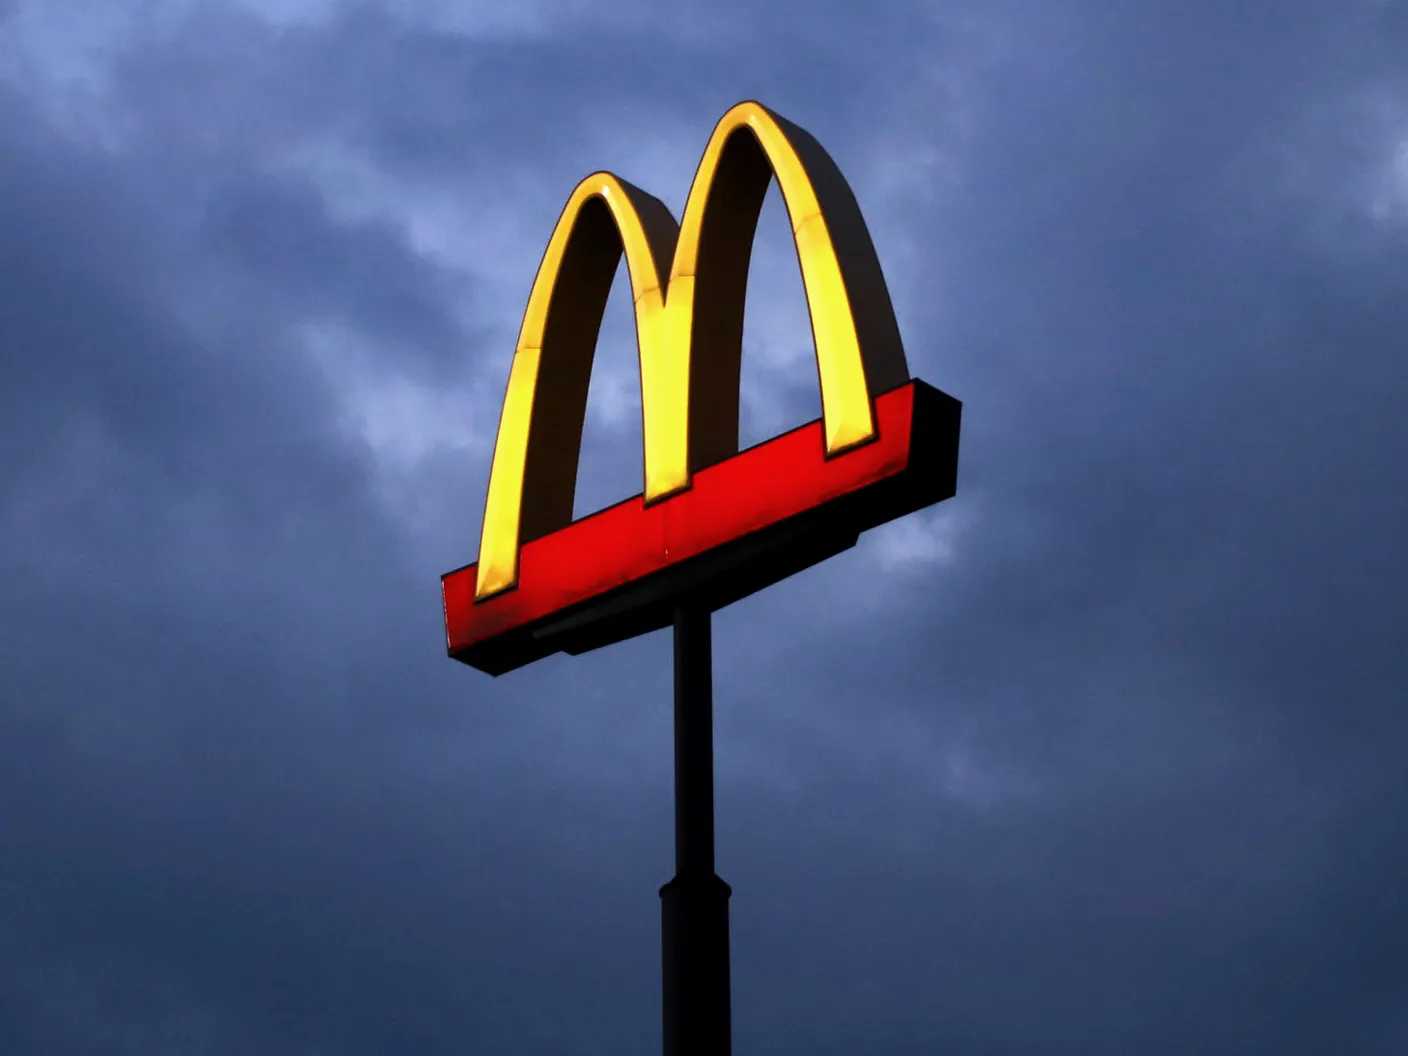 McDonalds sexual assault claims